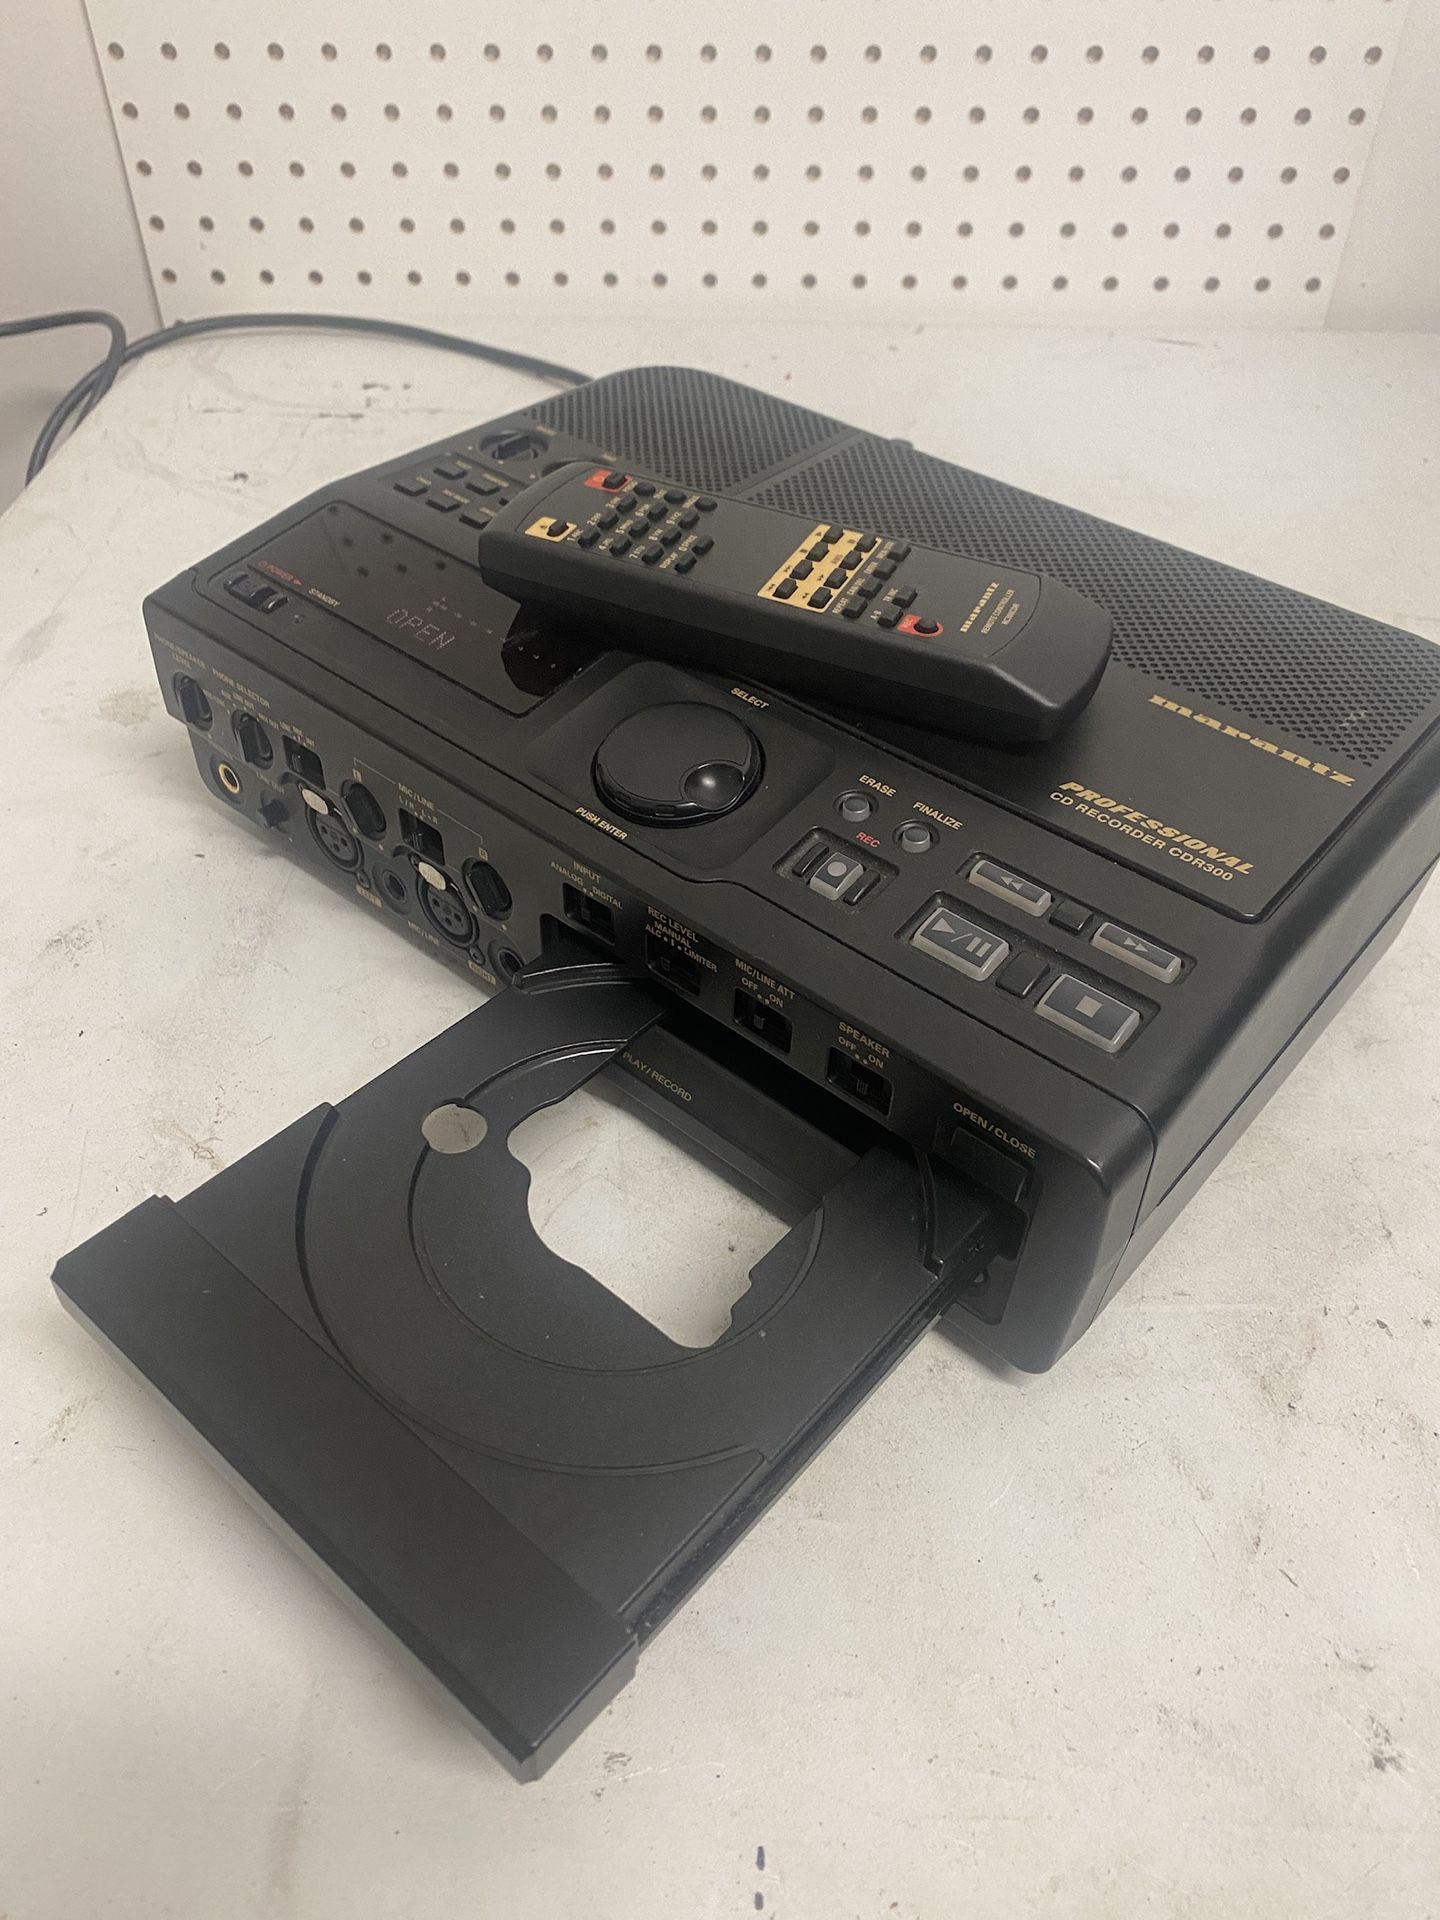 MARANTZ cdr300 portable field recorder / player